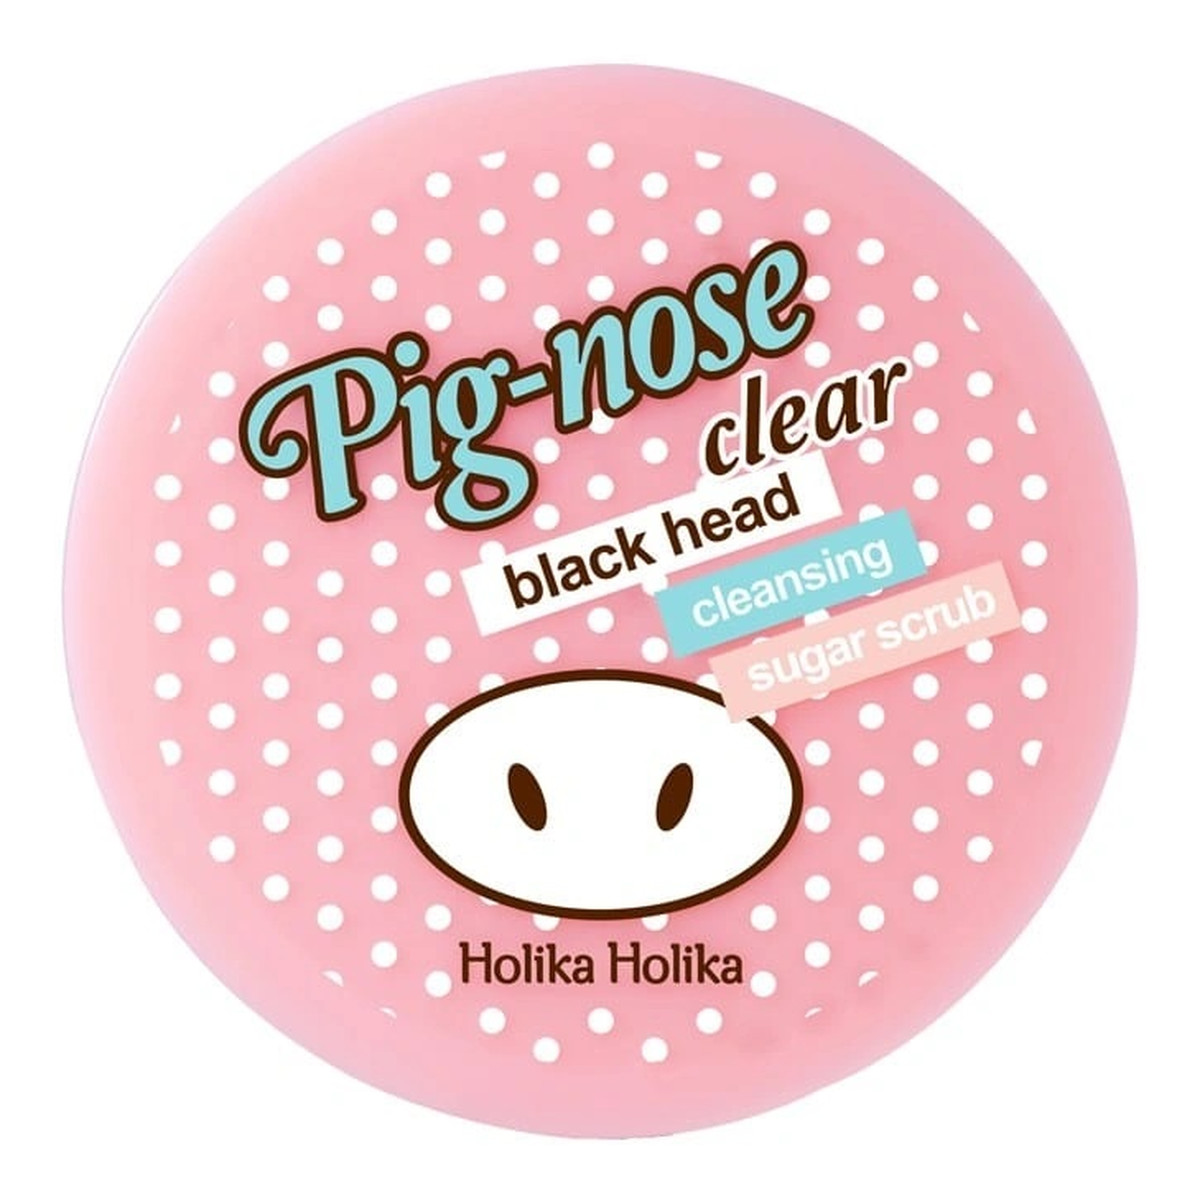 Holika Holika Pig-nose clear black head cleansing sugar scrub cukrowy peeling do twarzy 30ml